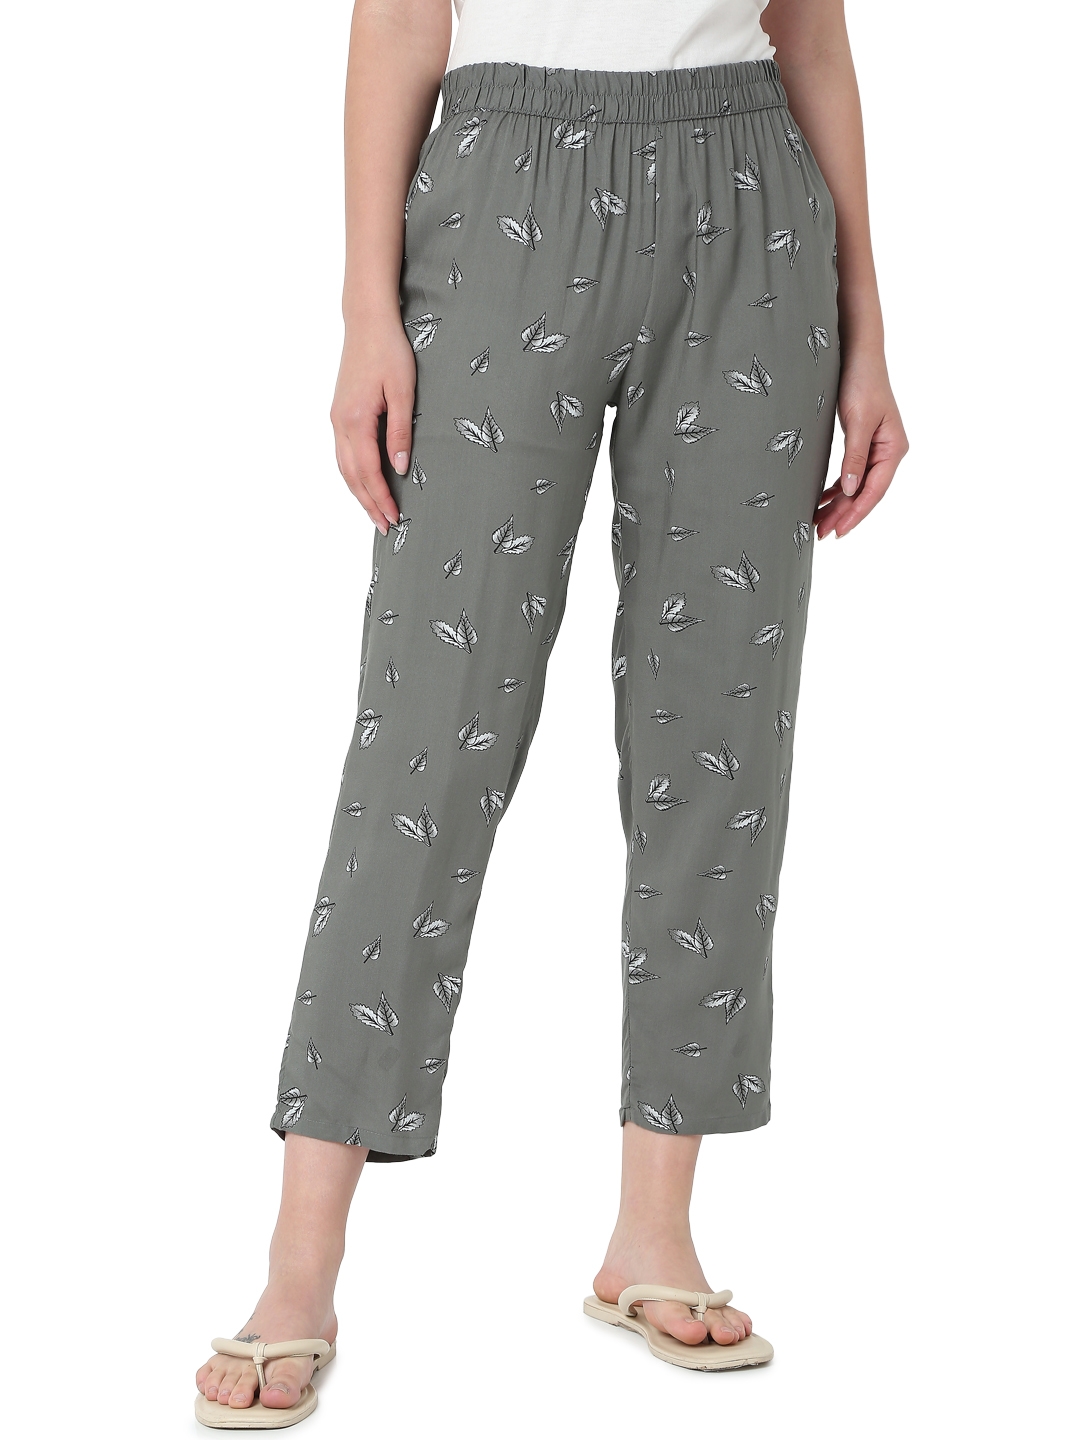 Smarty Pants | Smarty Pants women's cotton grey color floral print pajama. 